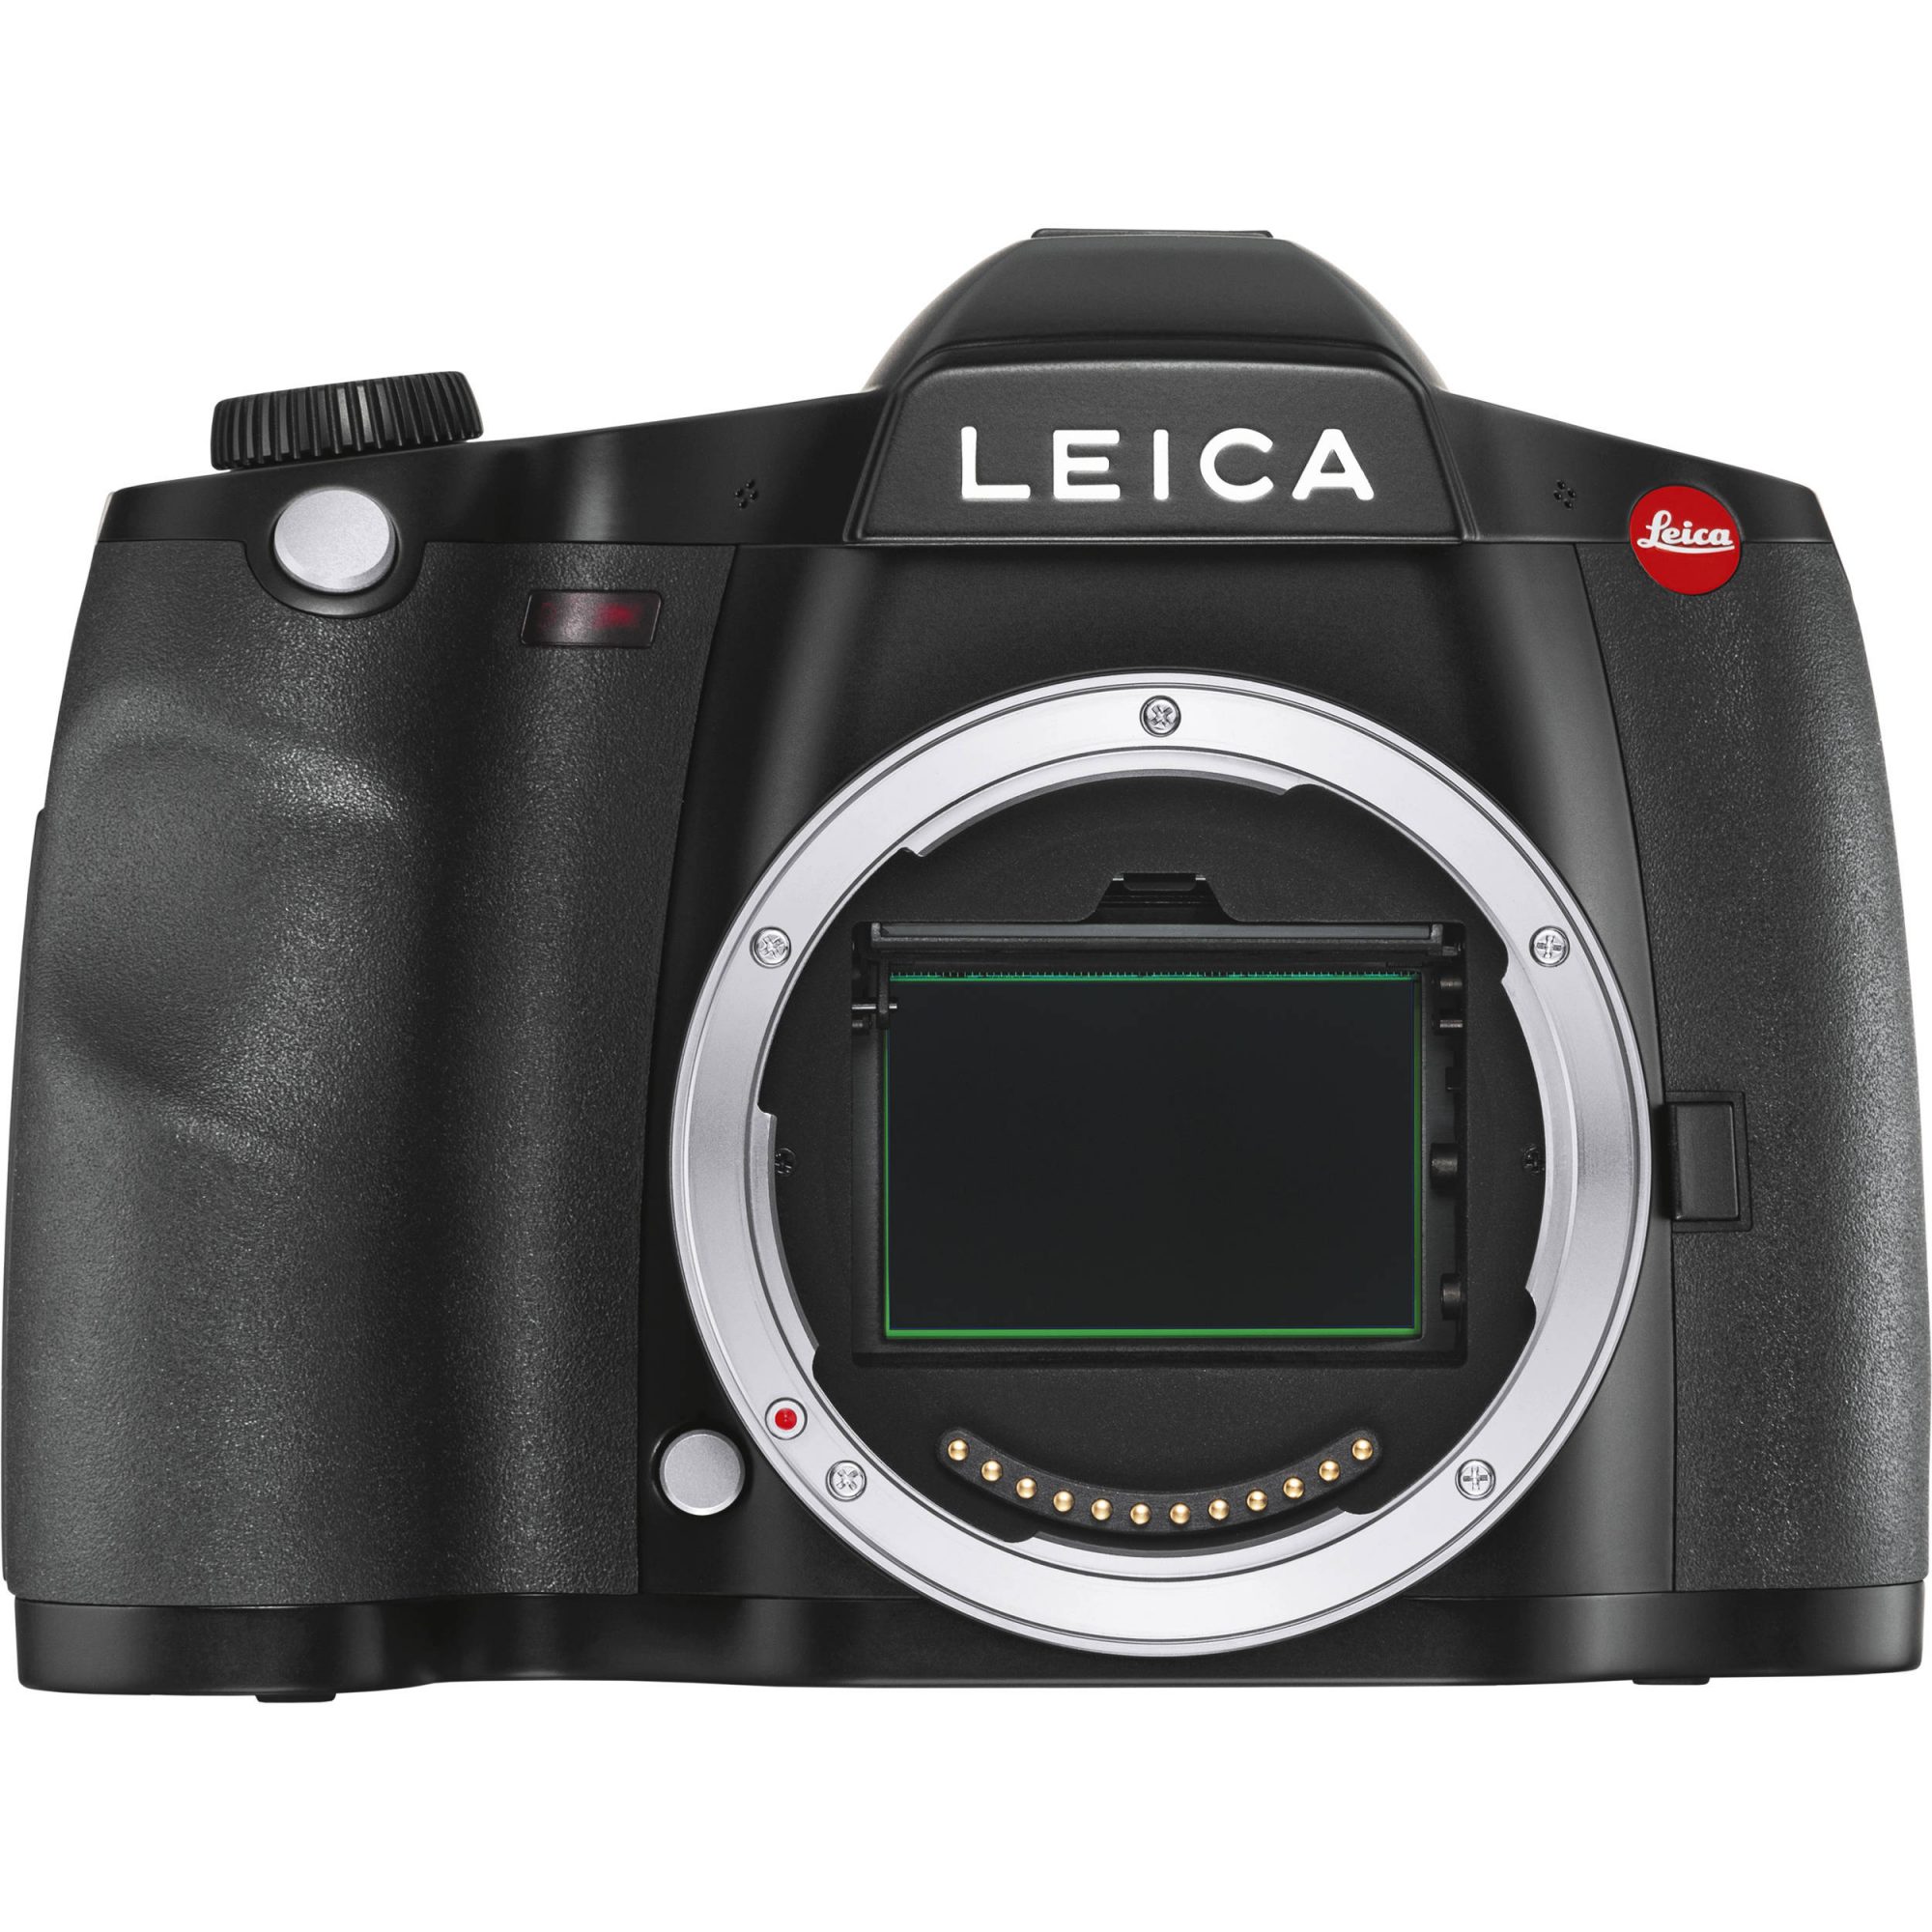 Leica S3 camera manual download